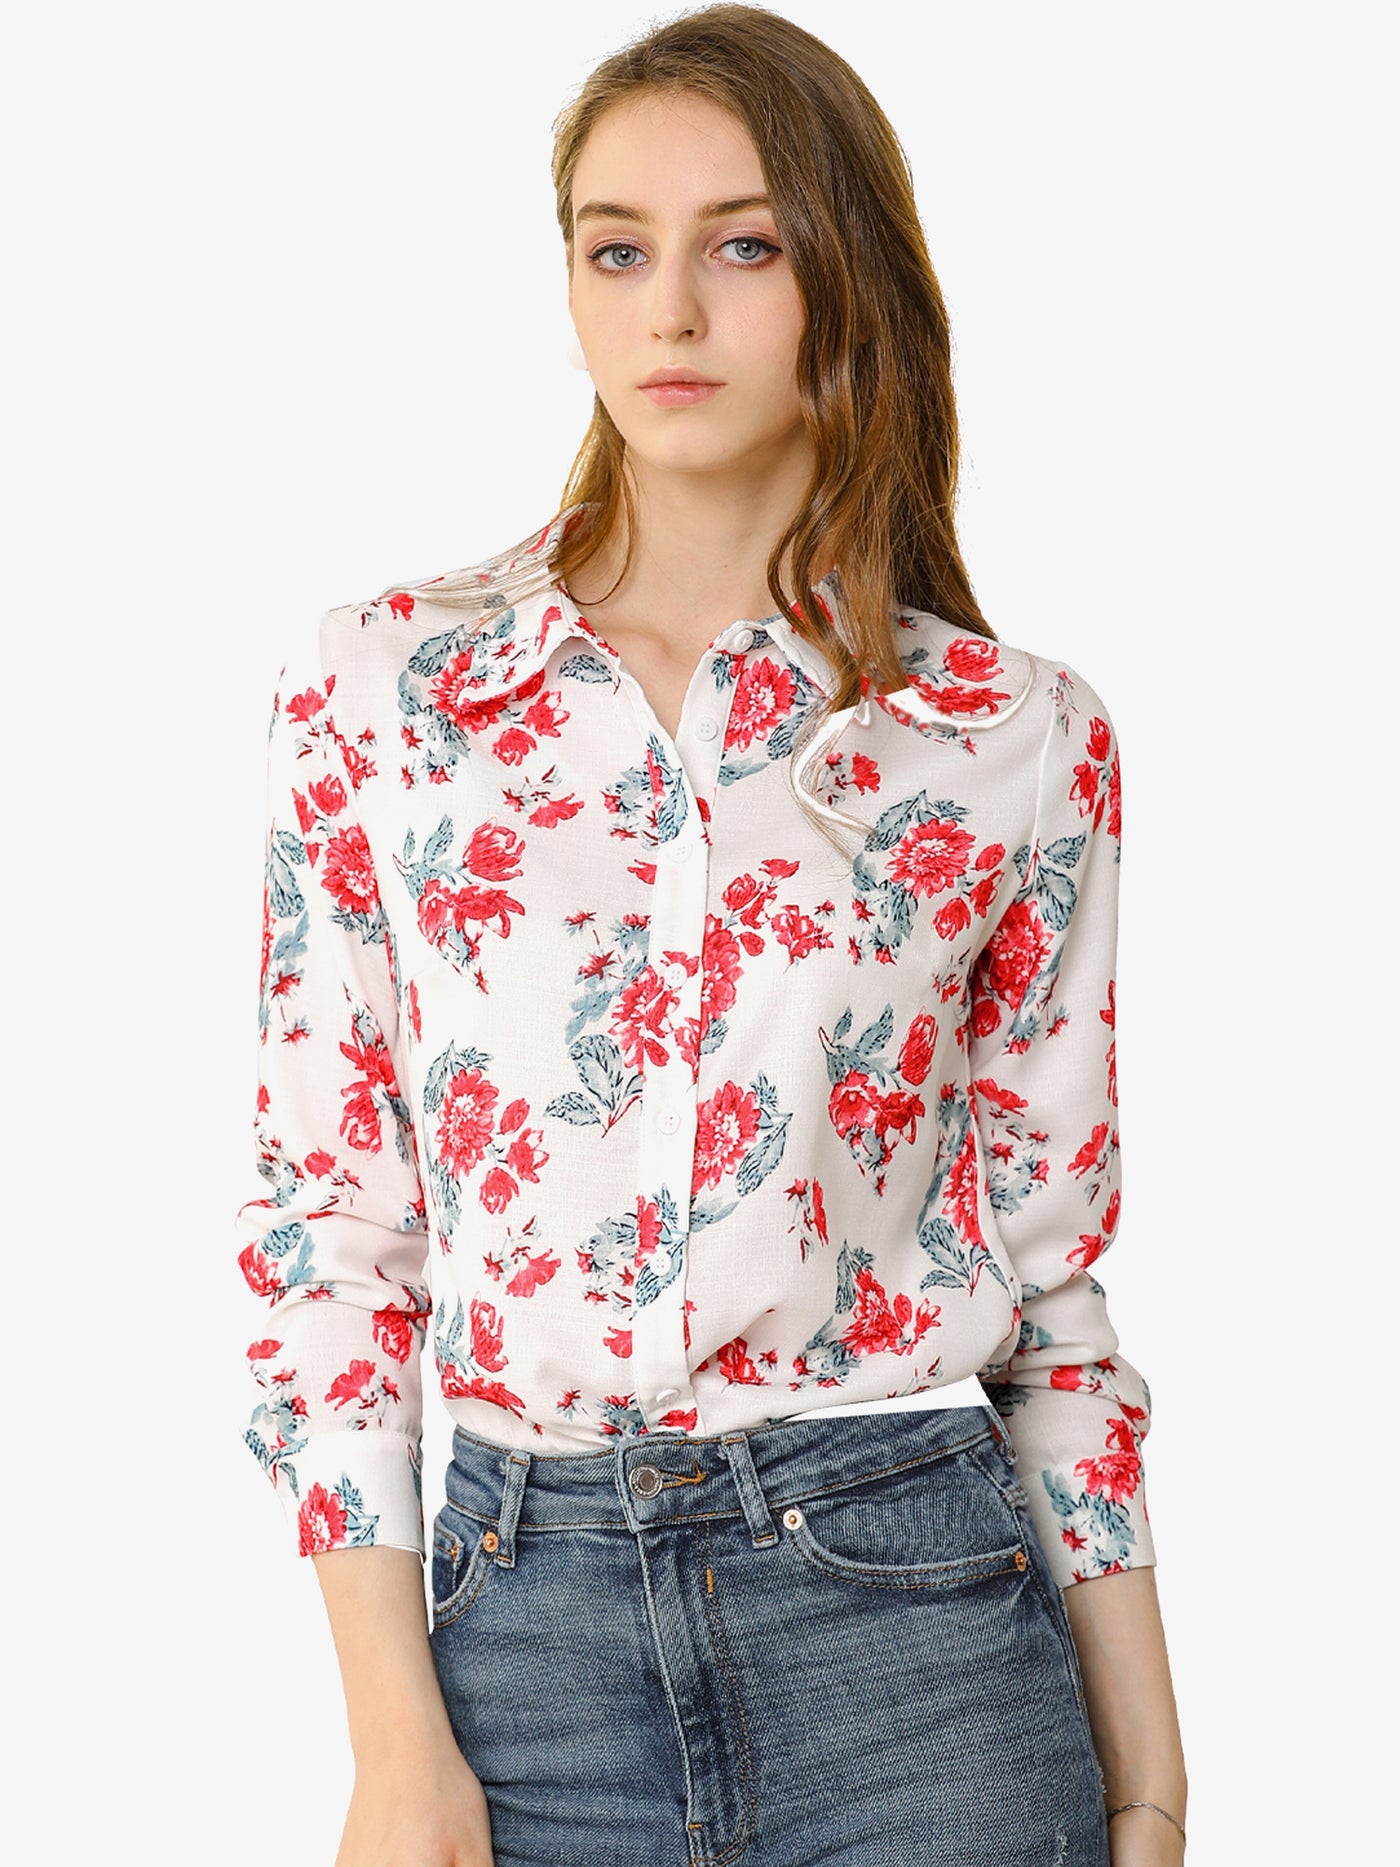 Allegra K Button Down Floral Blouse Long Sleeve Point Collar Shirt Top